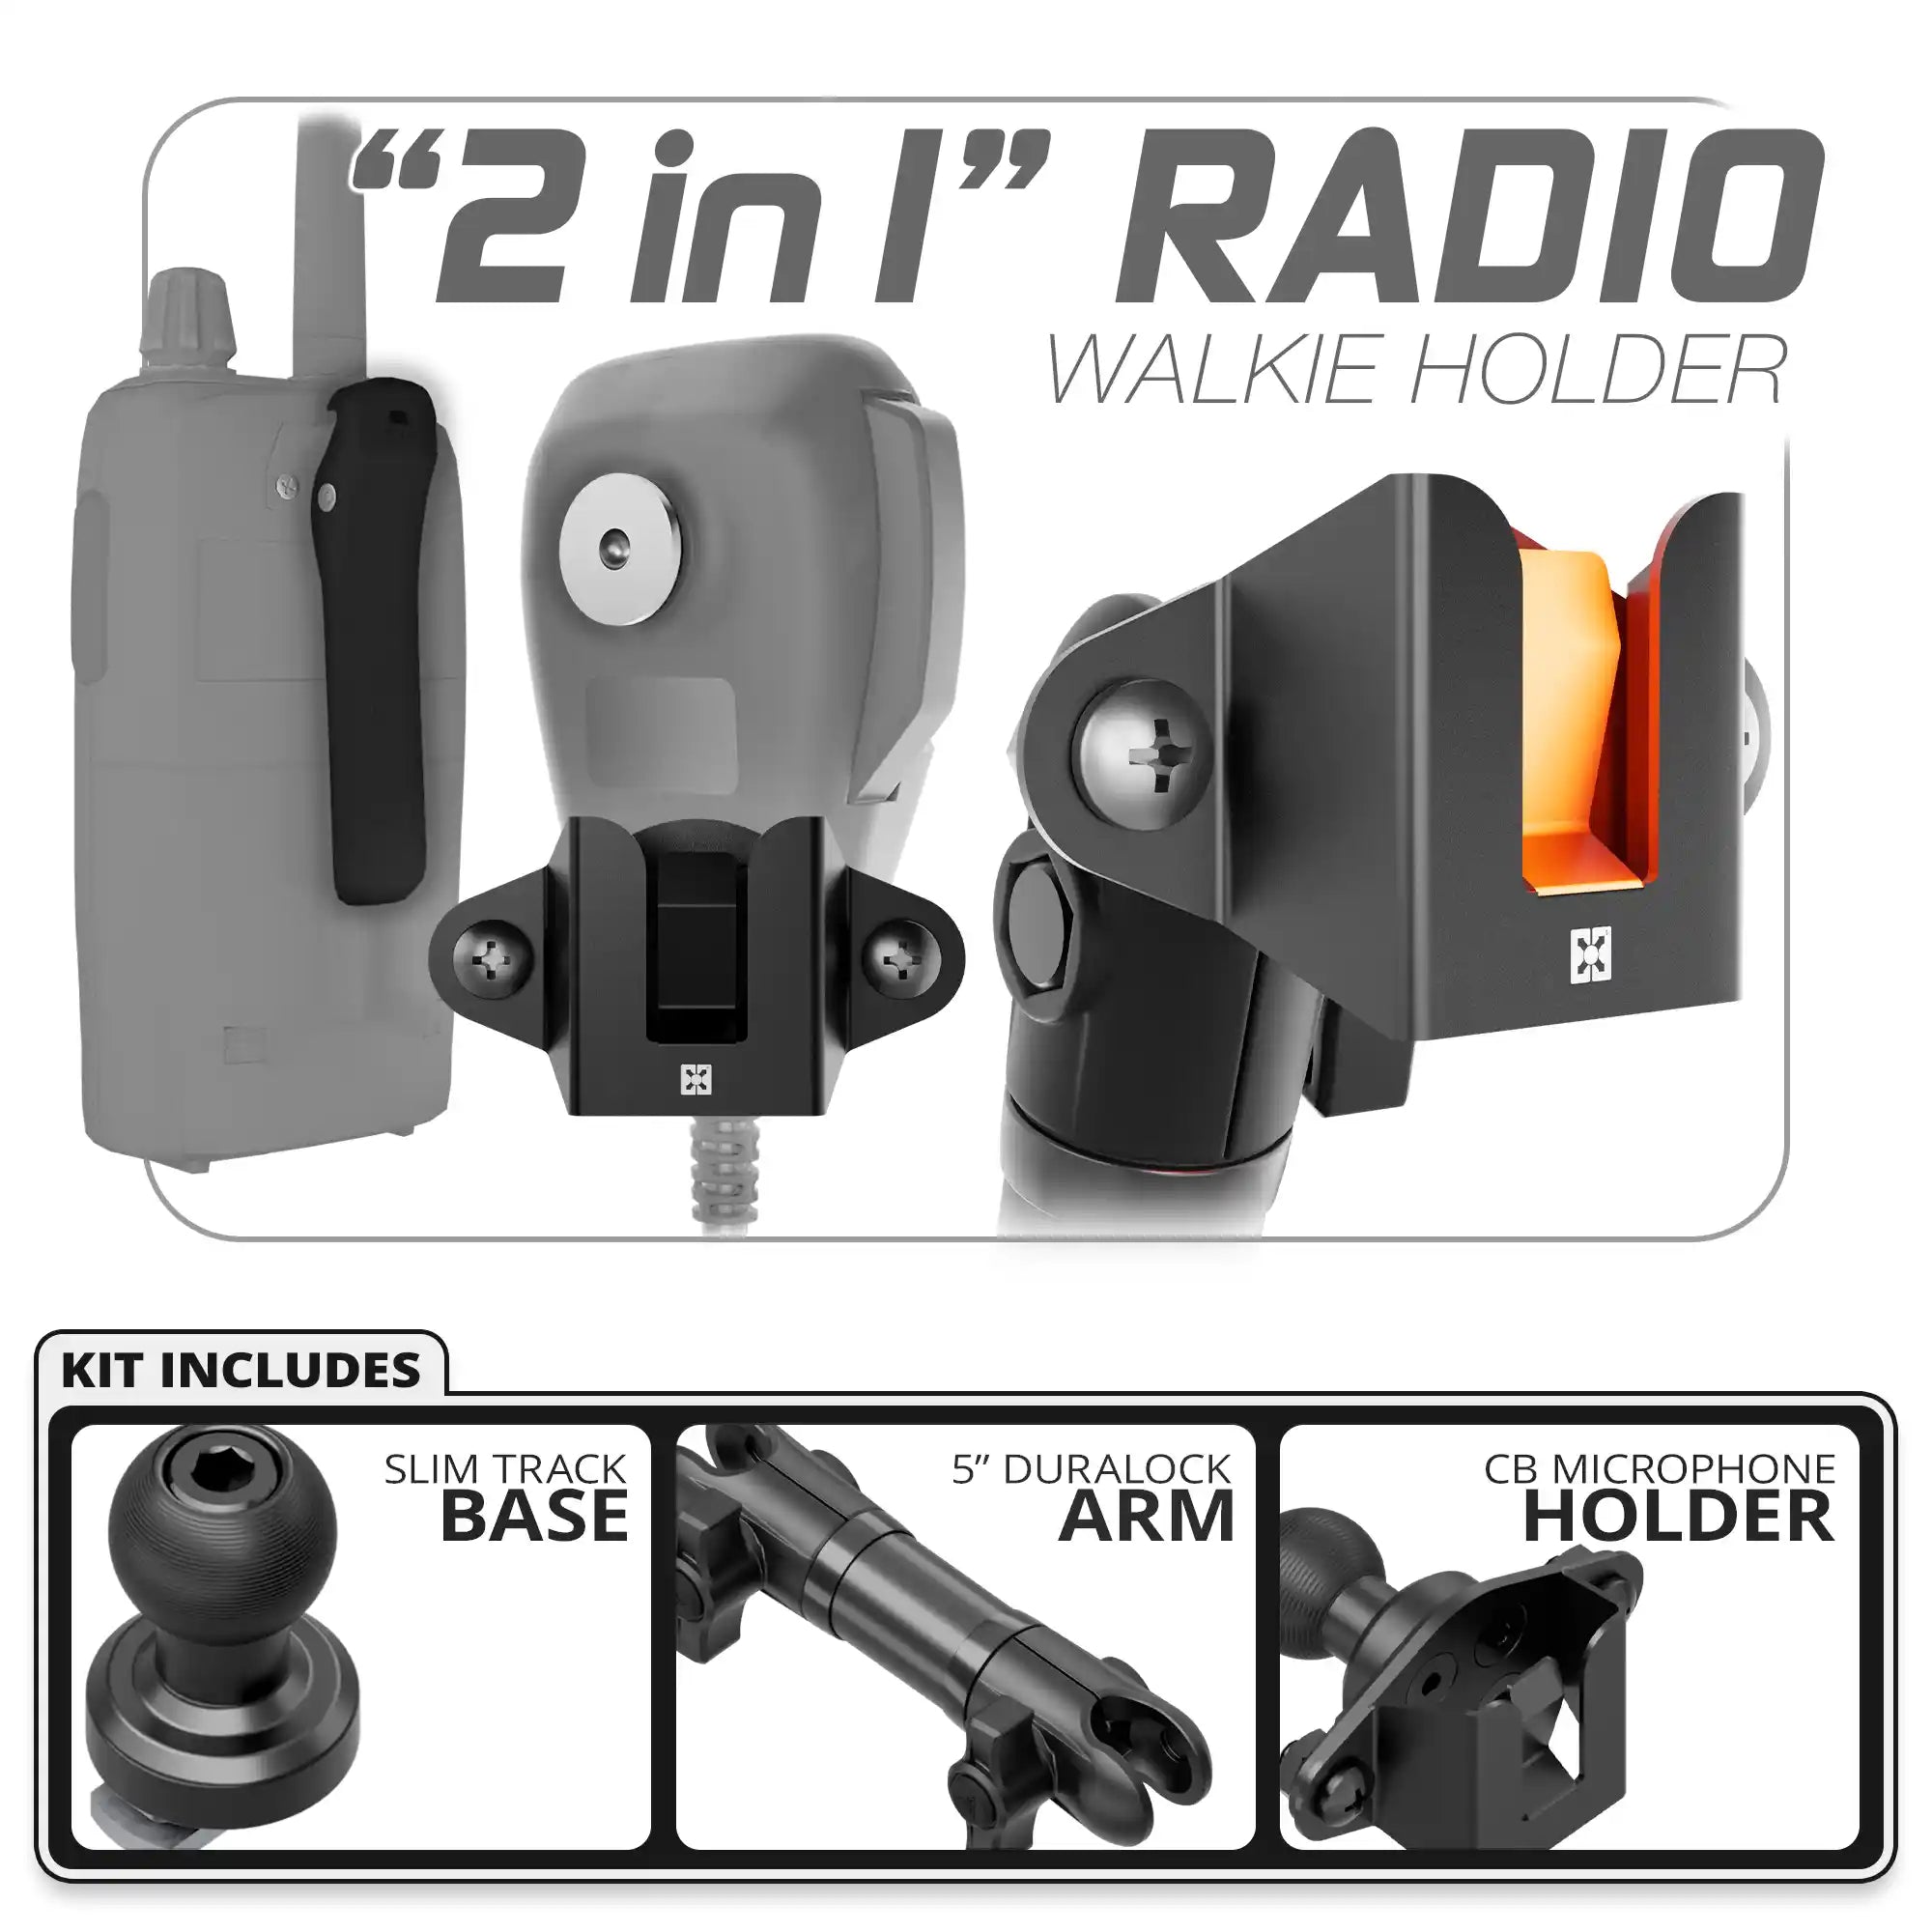 CB Radio/Microphone Holder | Slim Track Base | 5" DuraLock Arm